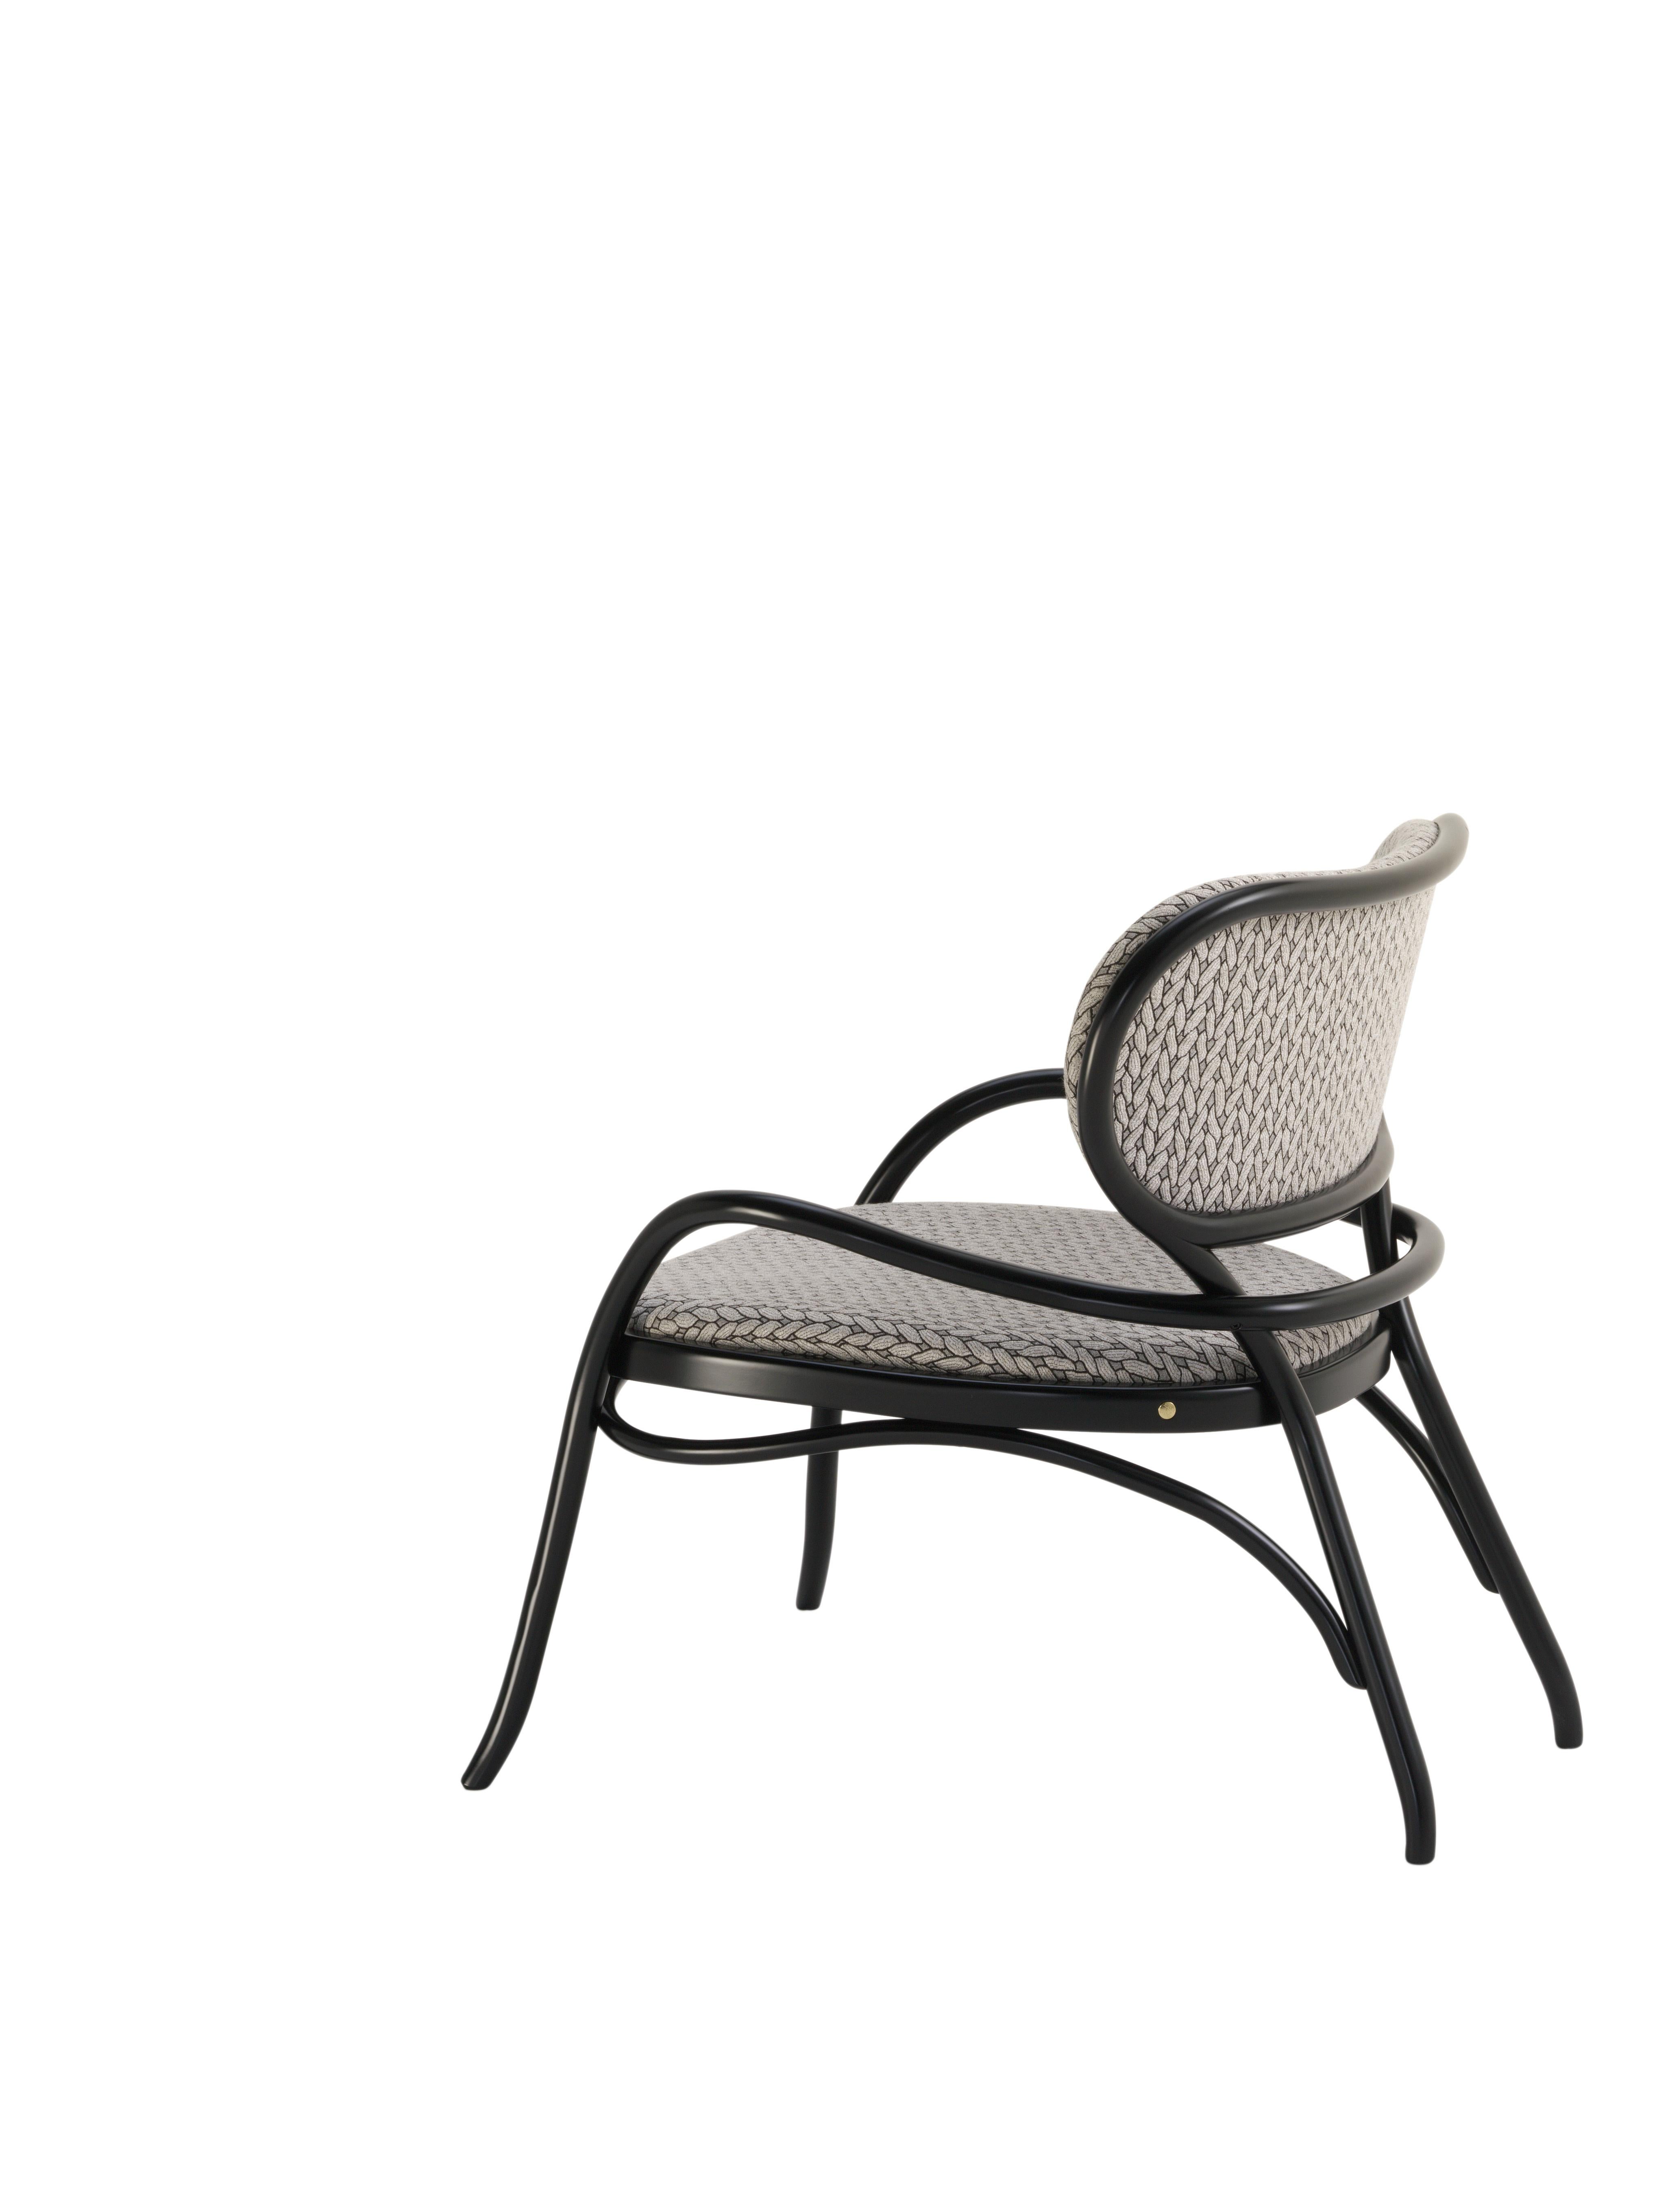 Wood Gebrüder Thonet Vienna GmbH Lehnstuhl Lounge Chair with Upholstered Seat For Sale